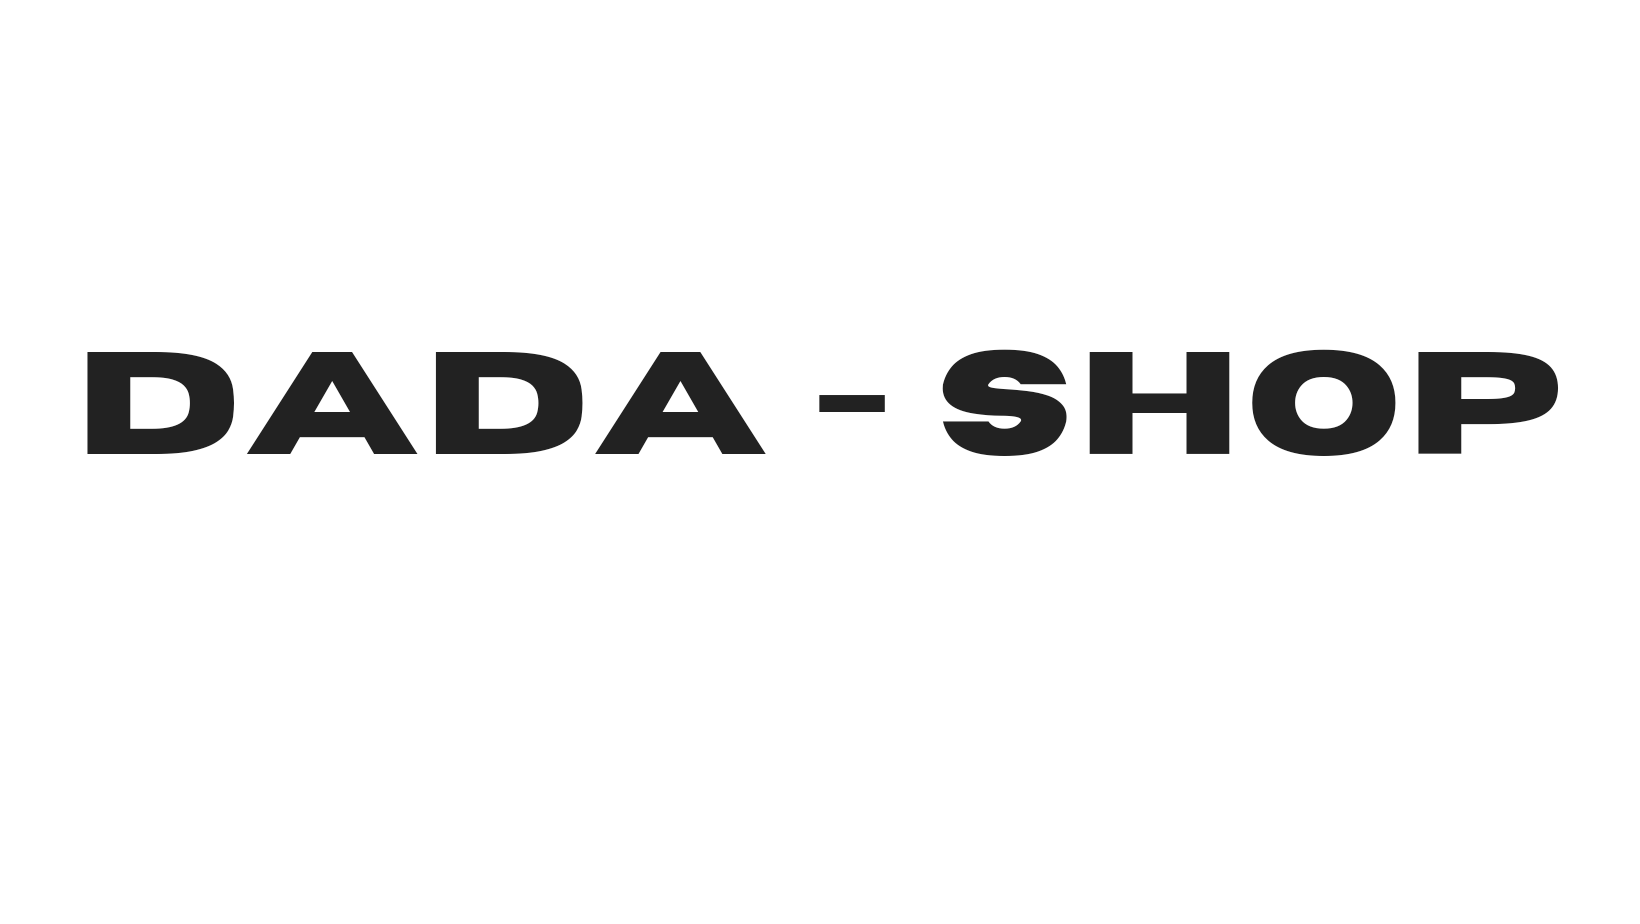 Dámske oblečenie - Dada shop